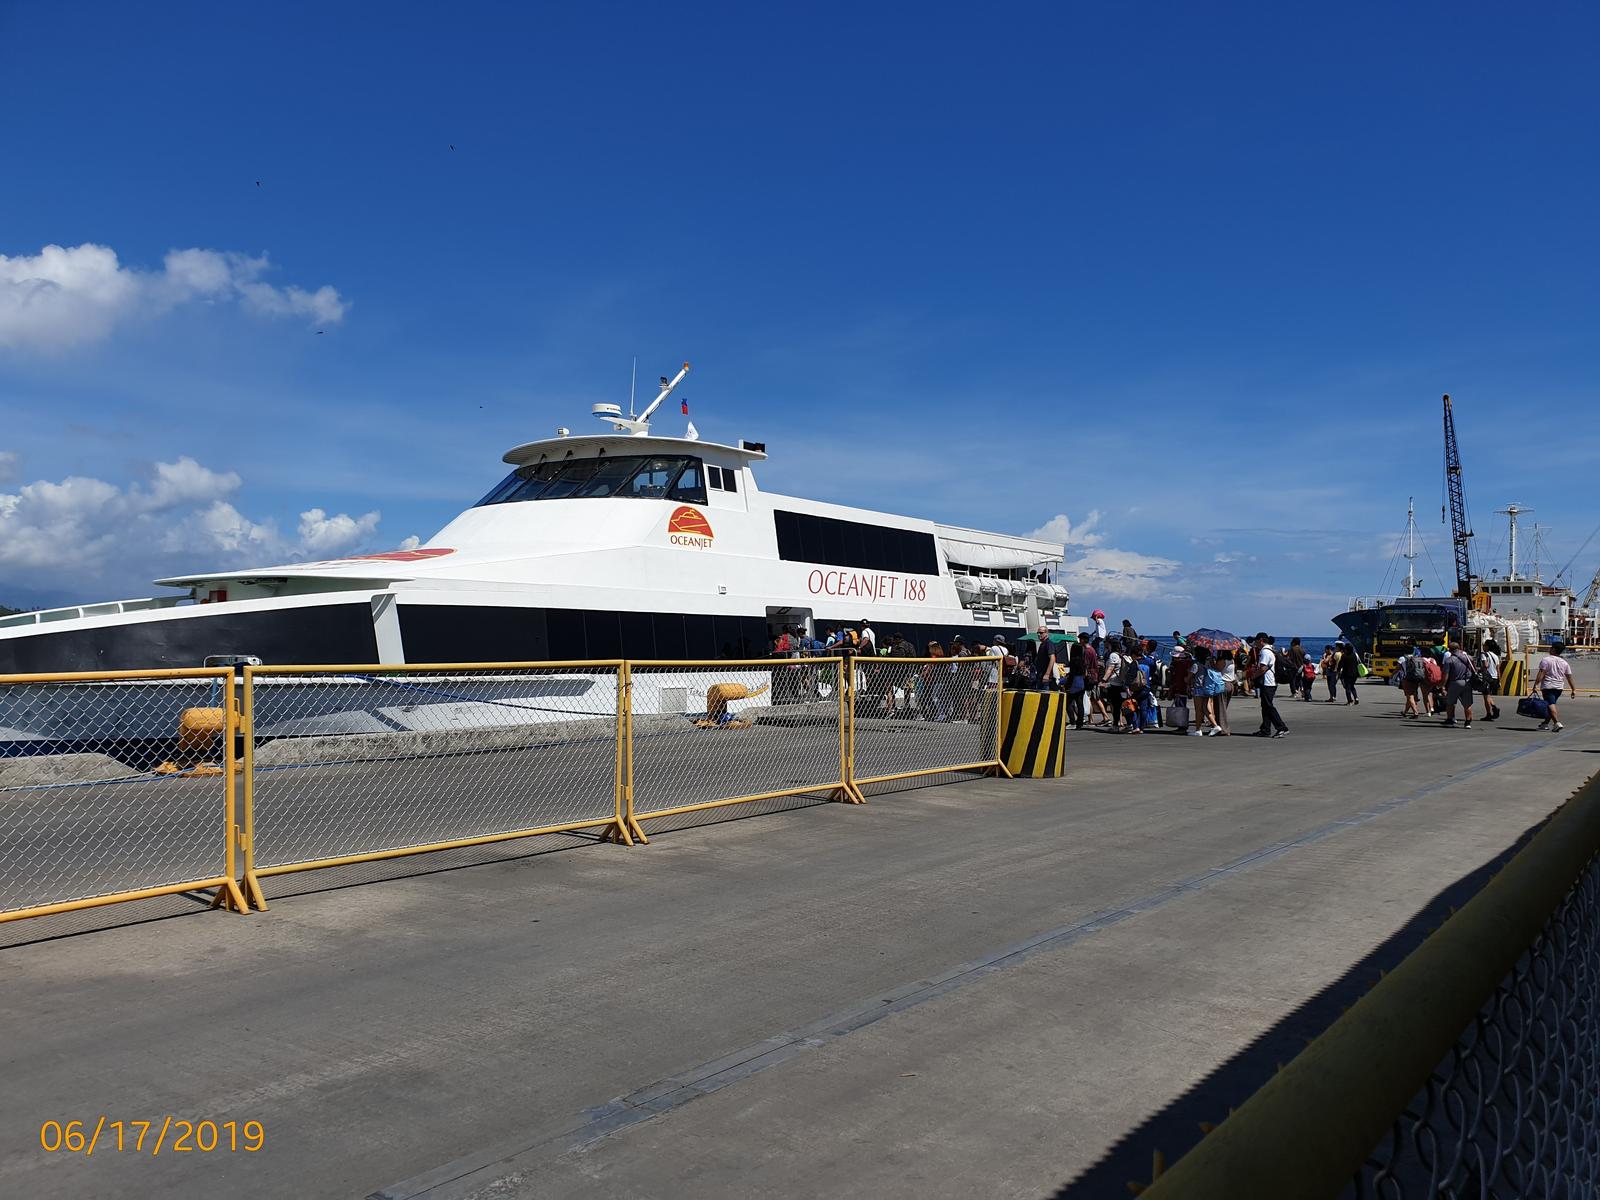 Day 09 - Transfer from Malapascua to Bohol